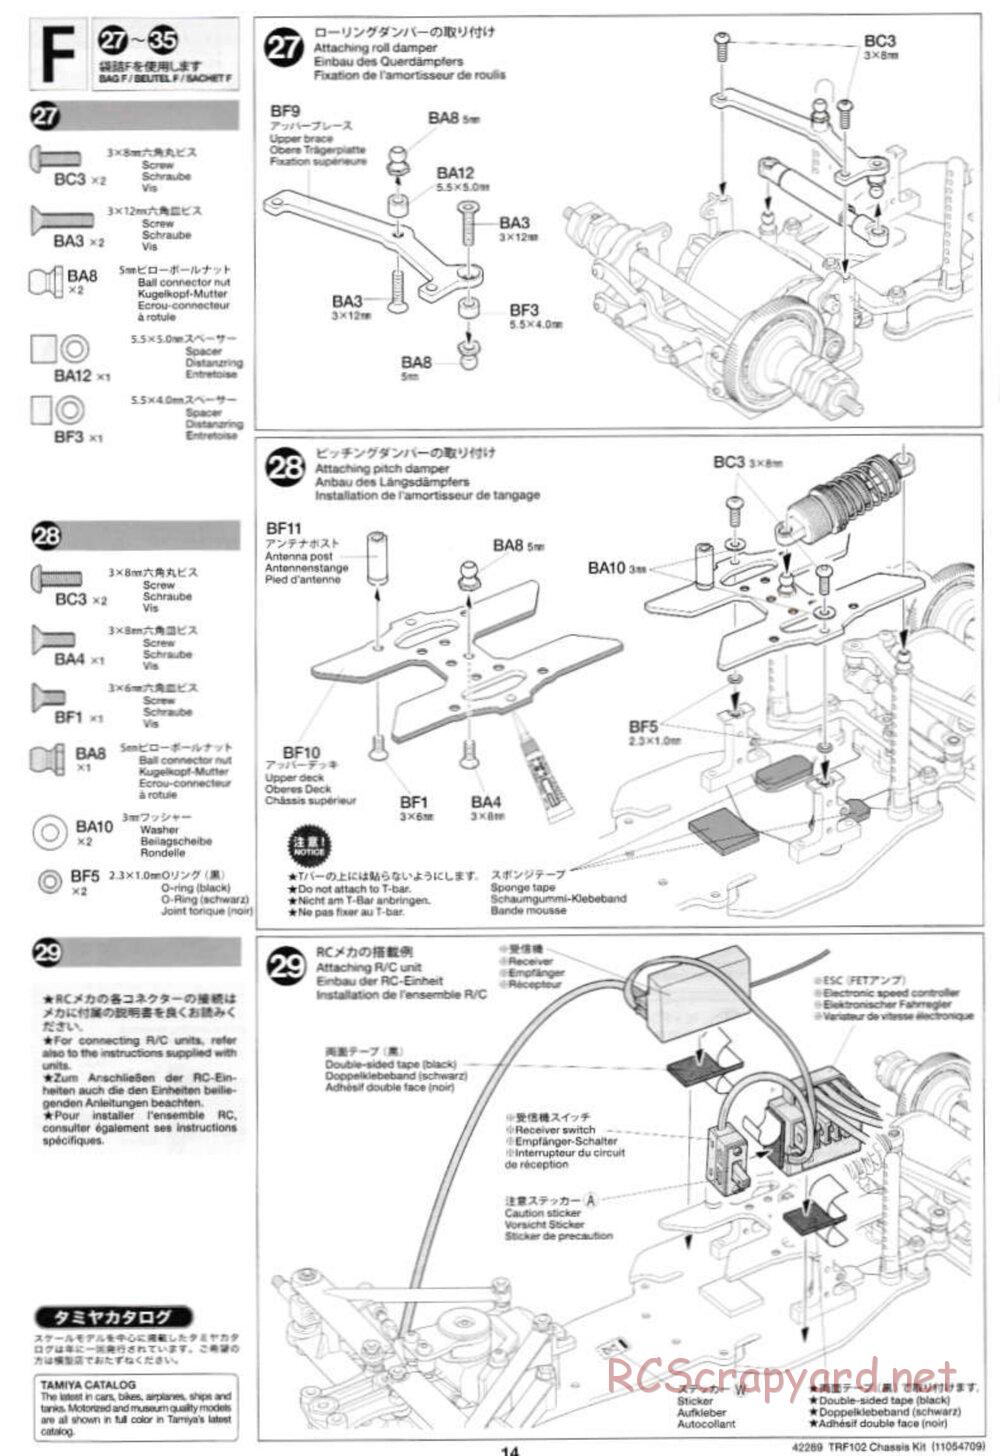 Tamiya - TRF102 Chassis - Manual - Page 14